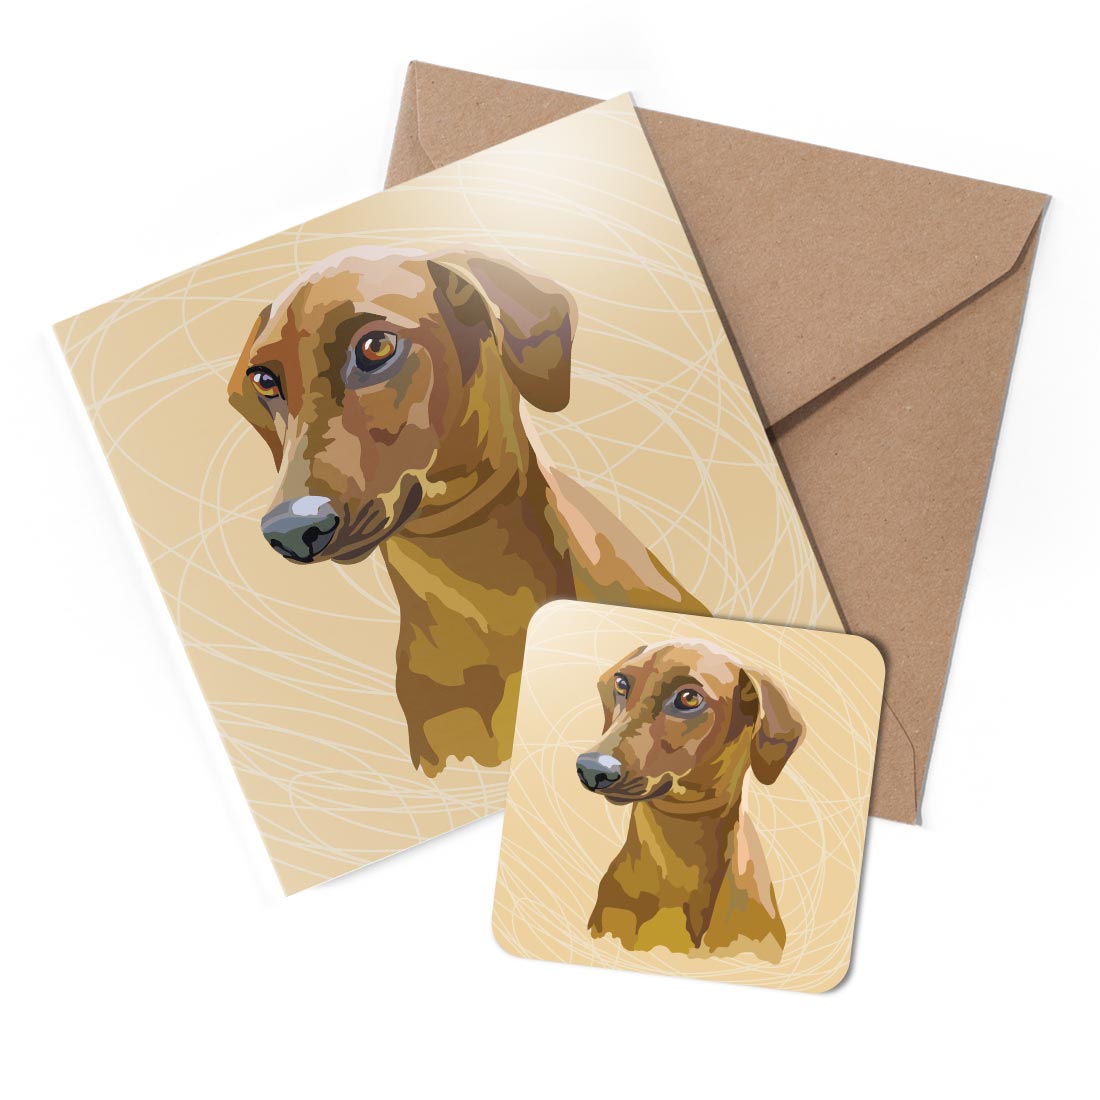 1 x Greeting Card & Coaster Set - Dachshund Sausage Dog Animal #59574 AN9674